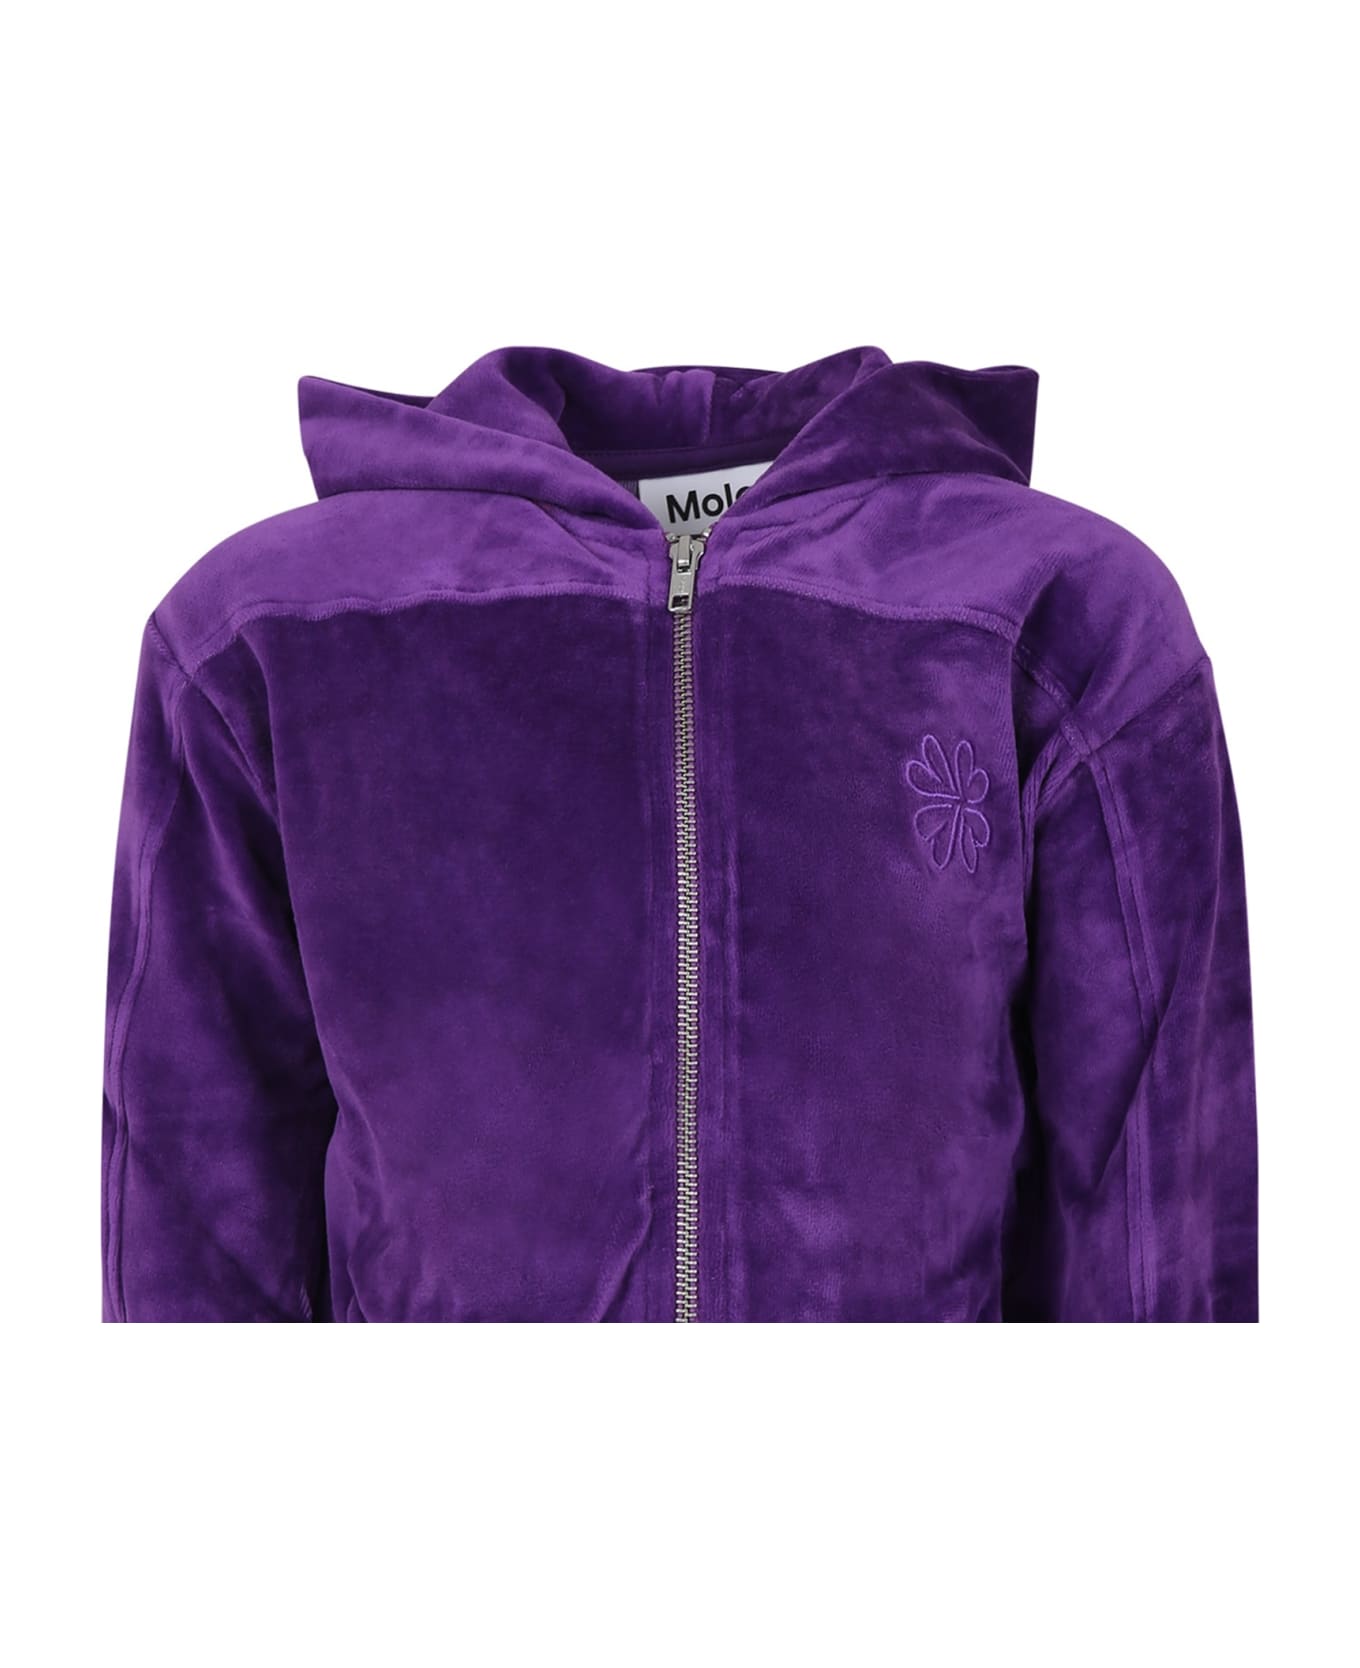 Molo Purple Sweatshirt For Girls With Embroidery - Violet ニットウェア＆スウェットシャツ